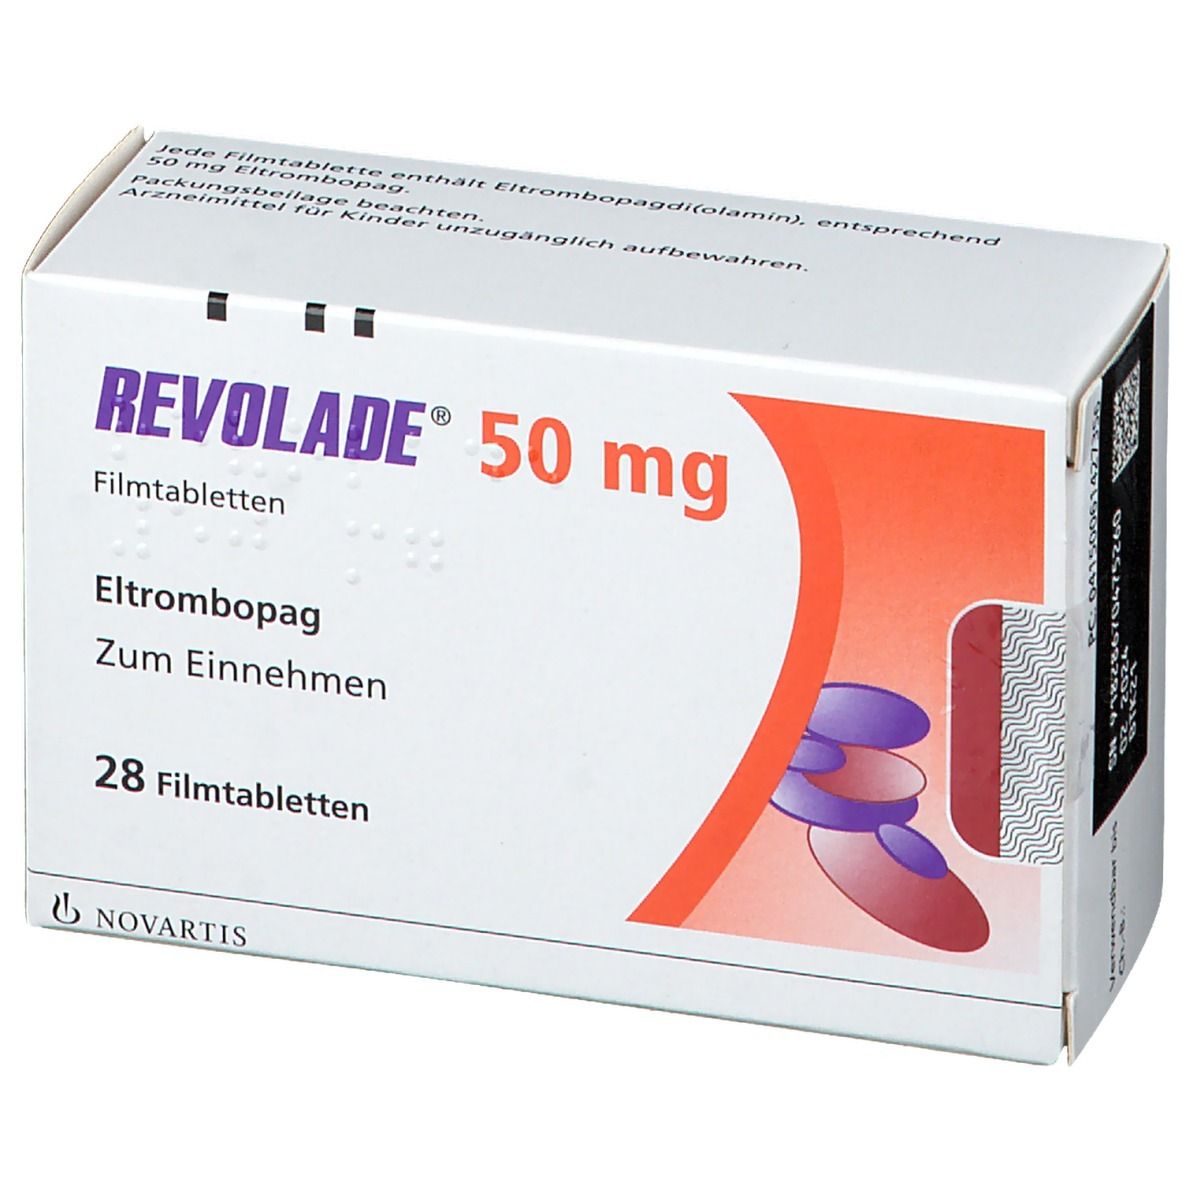 Revolade® 50 mg